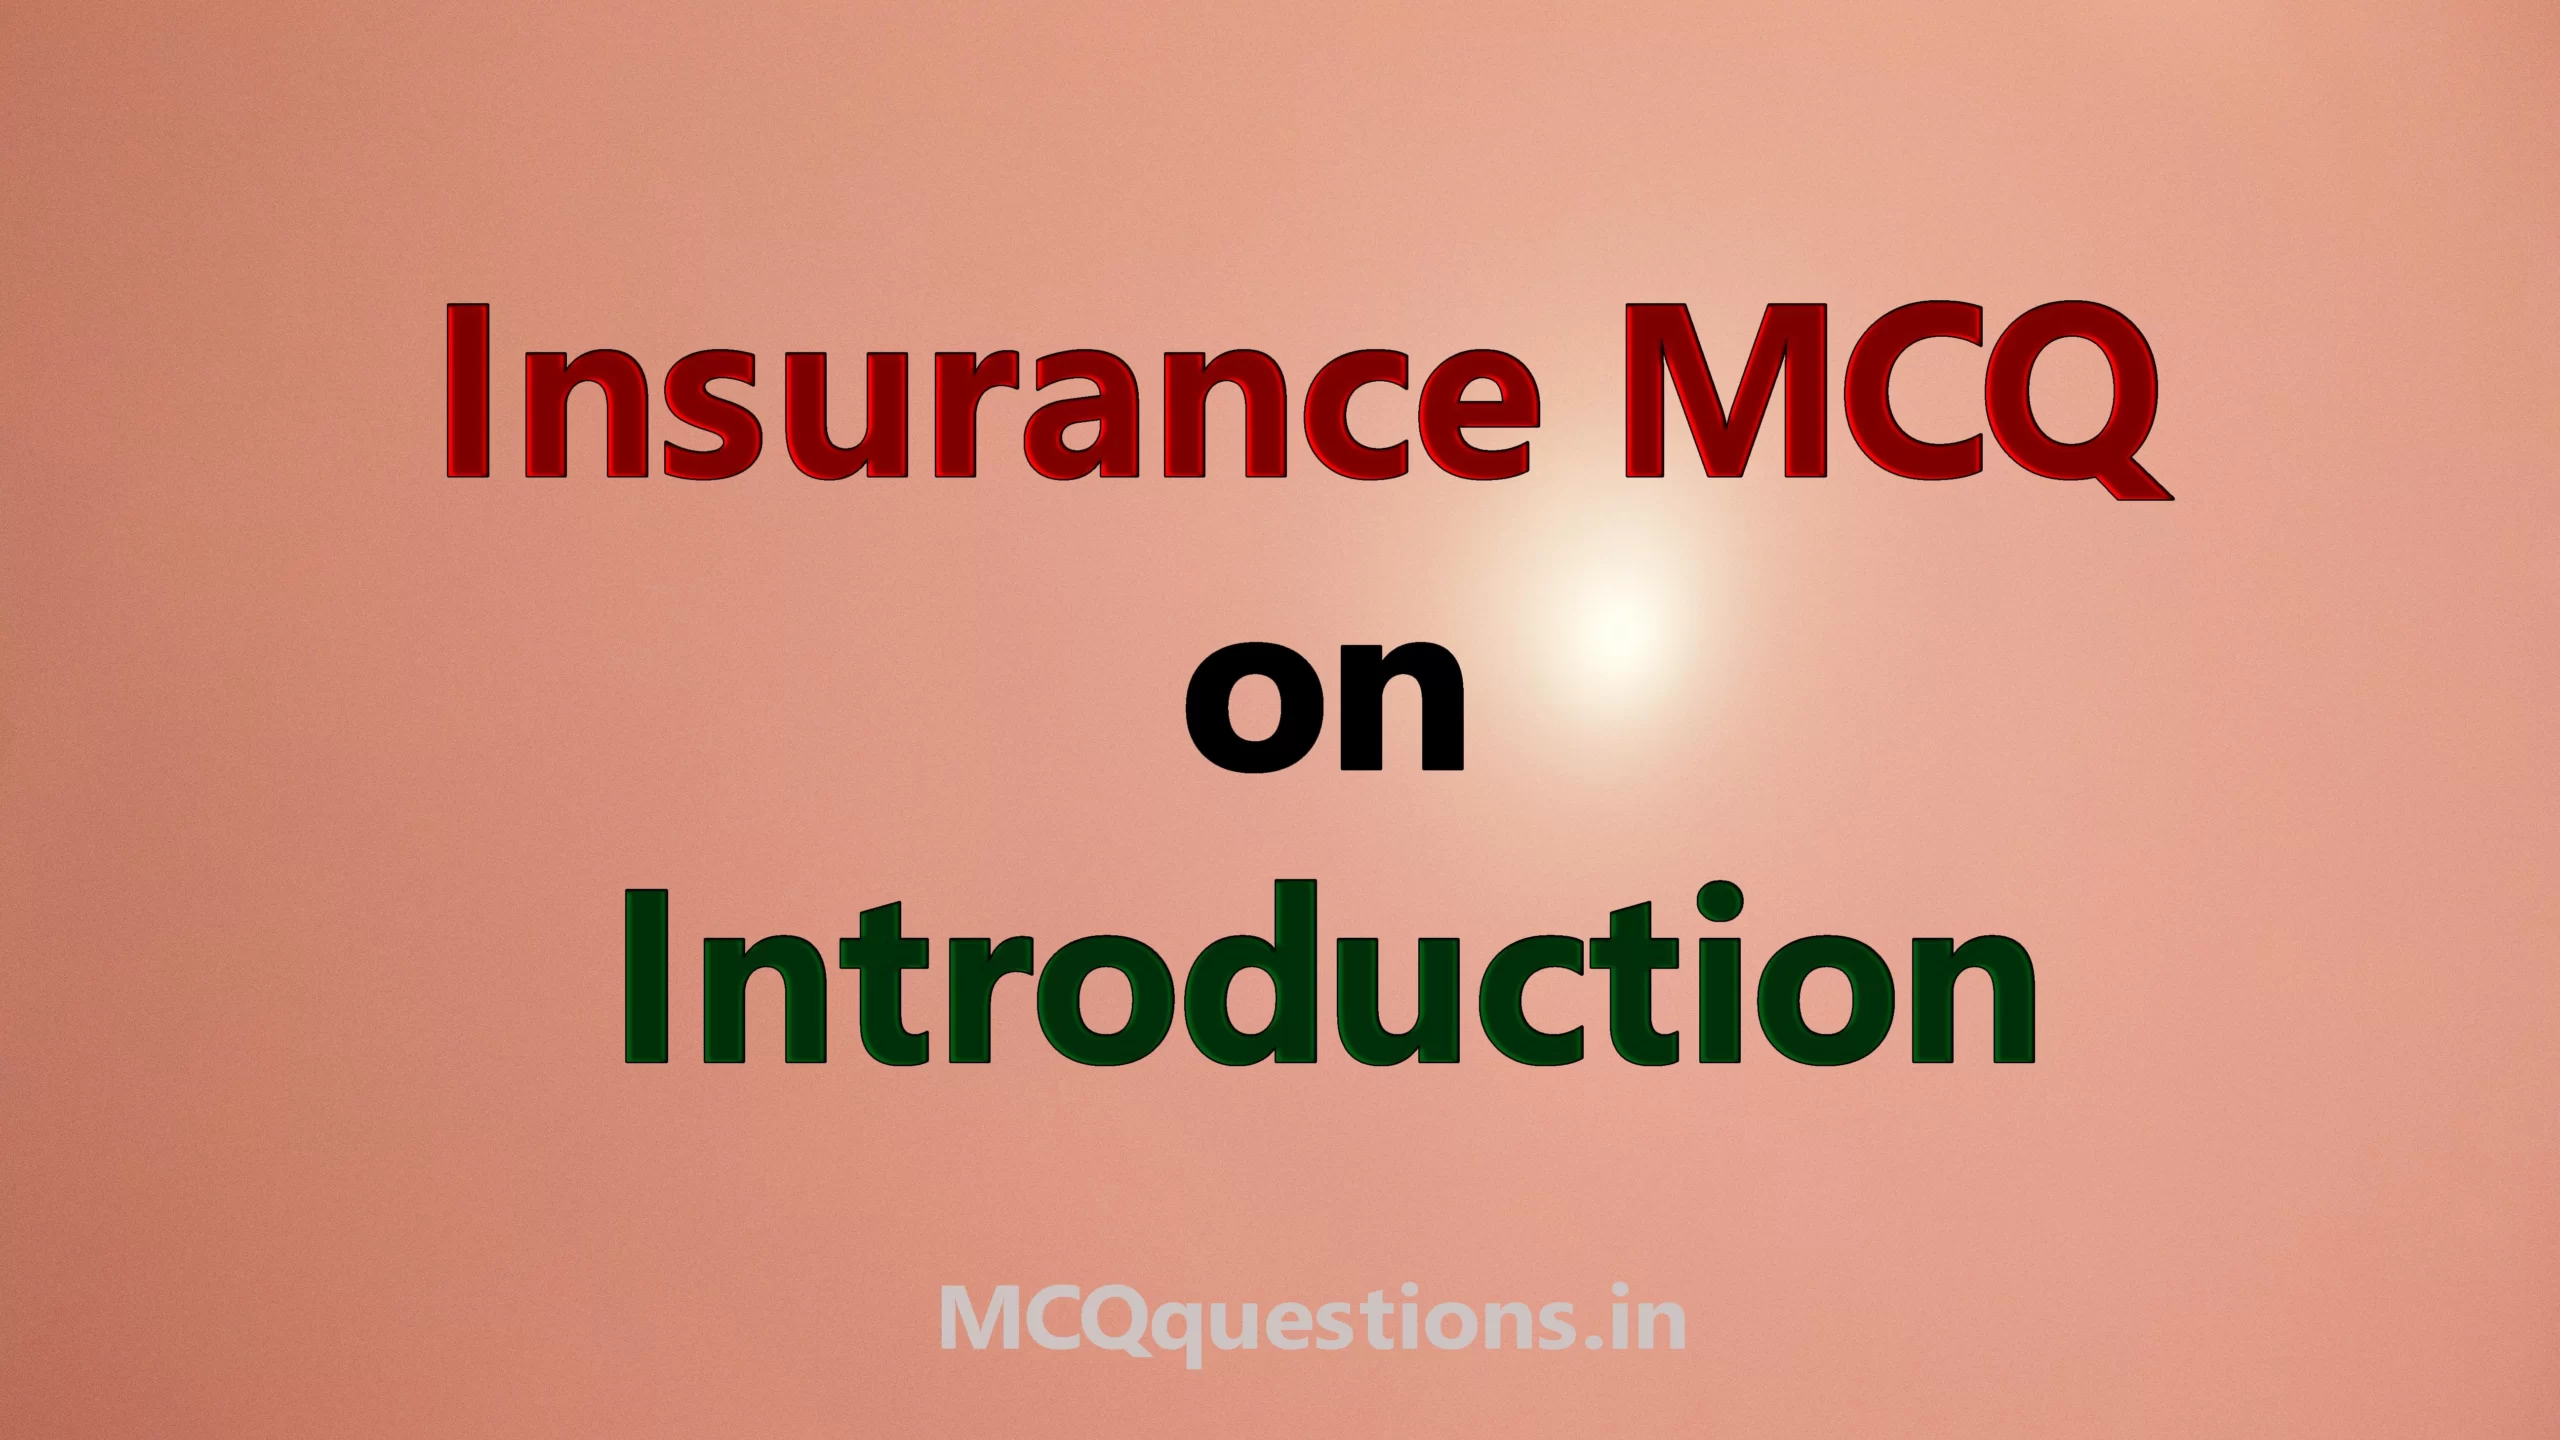 Insurance MCQ